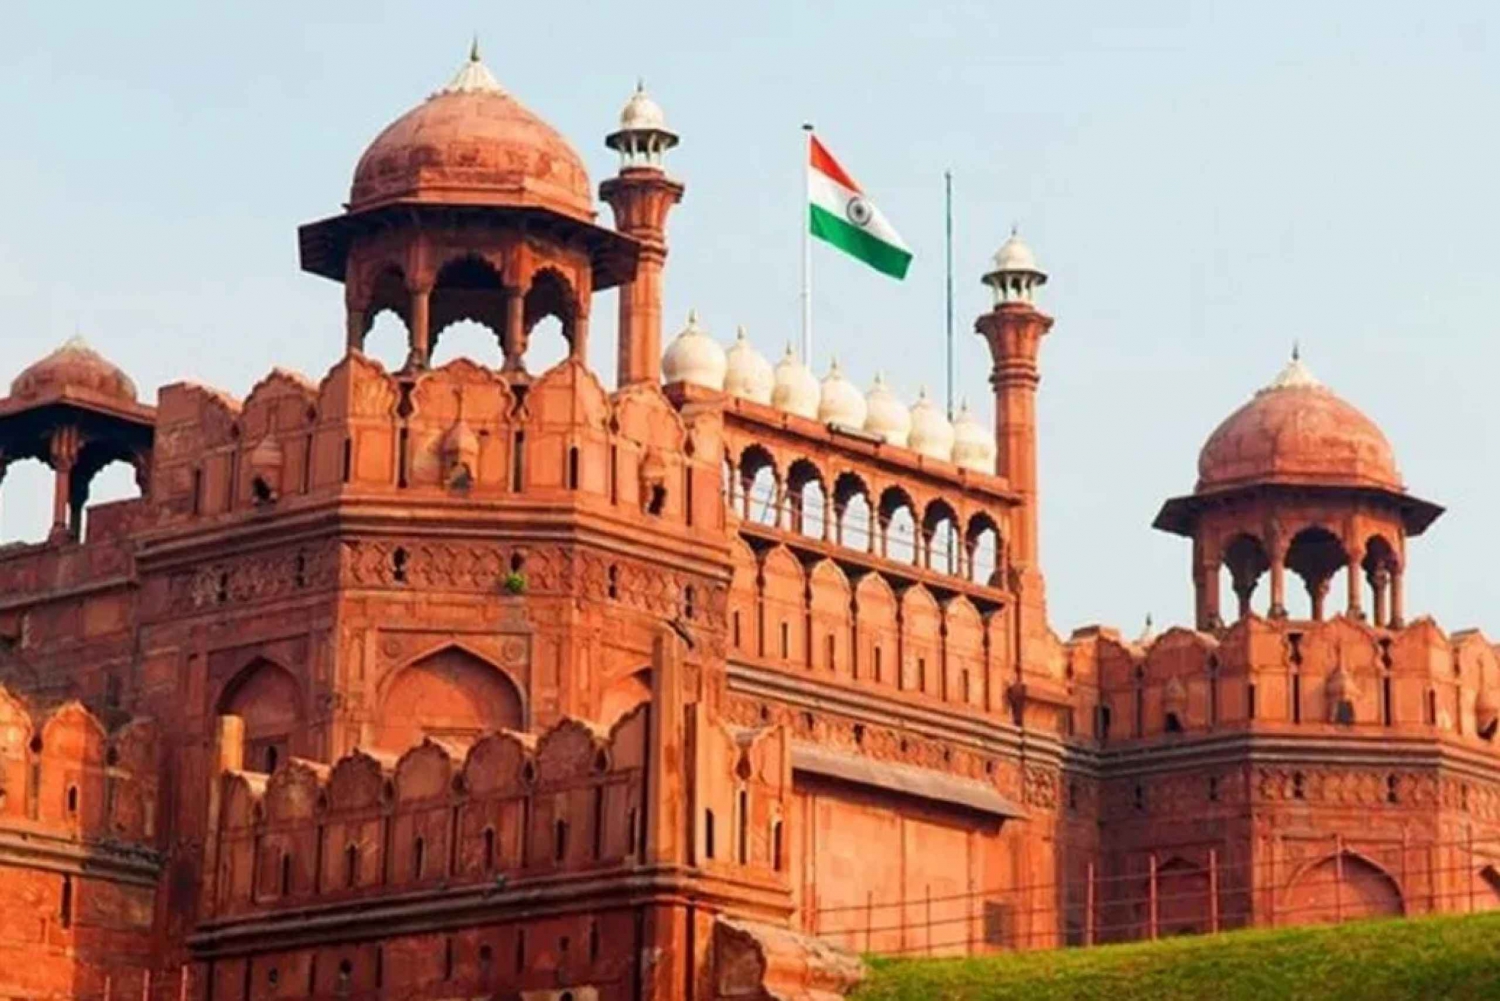 Delhi: 3-Day Delhi, Agra & Jaipur Guided Tour with Hotels